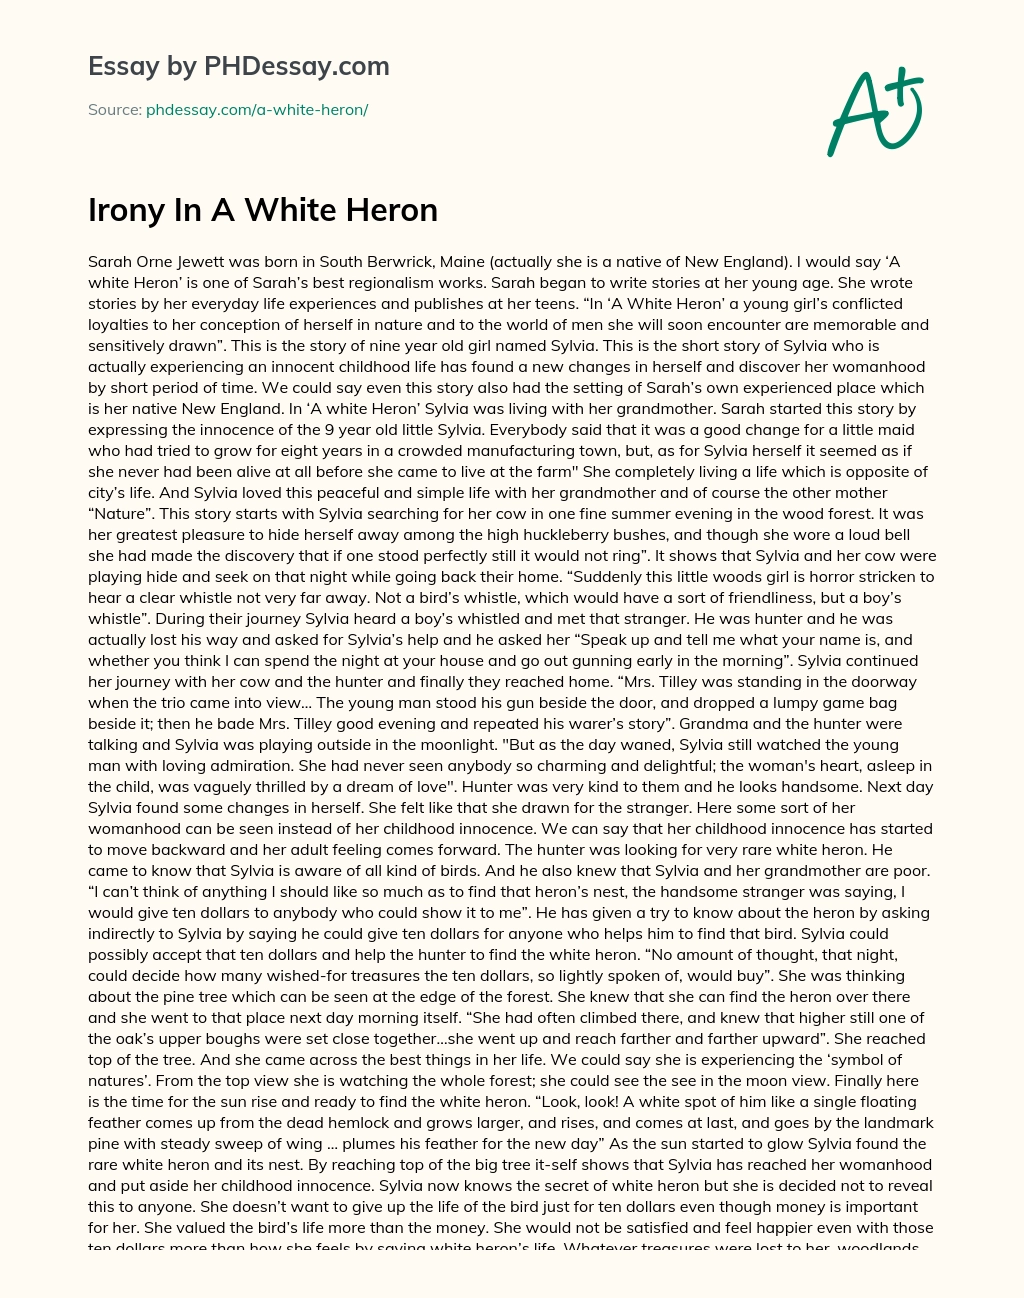 Irony In A White Heron essay